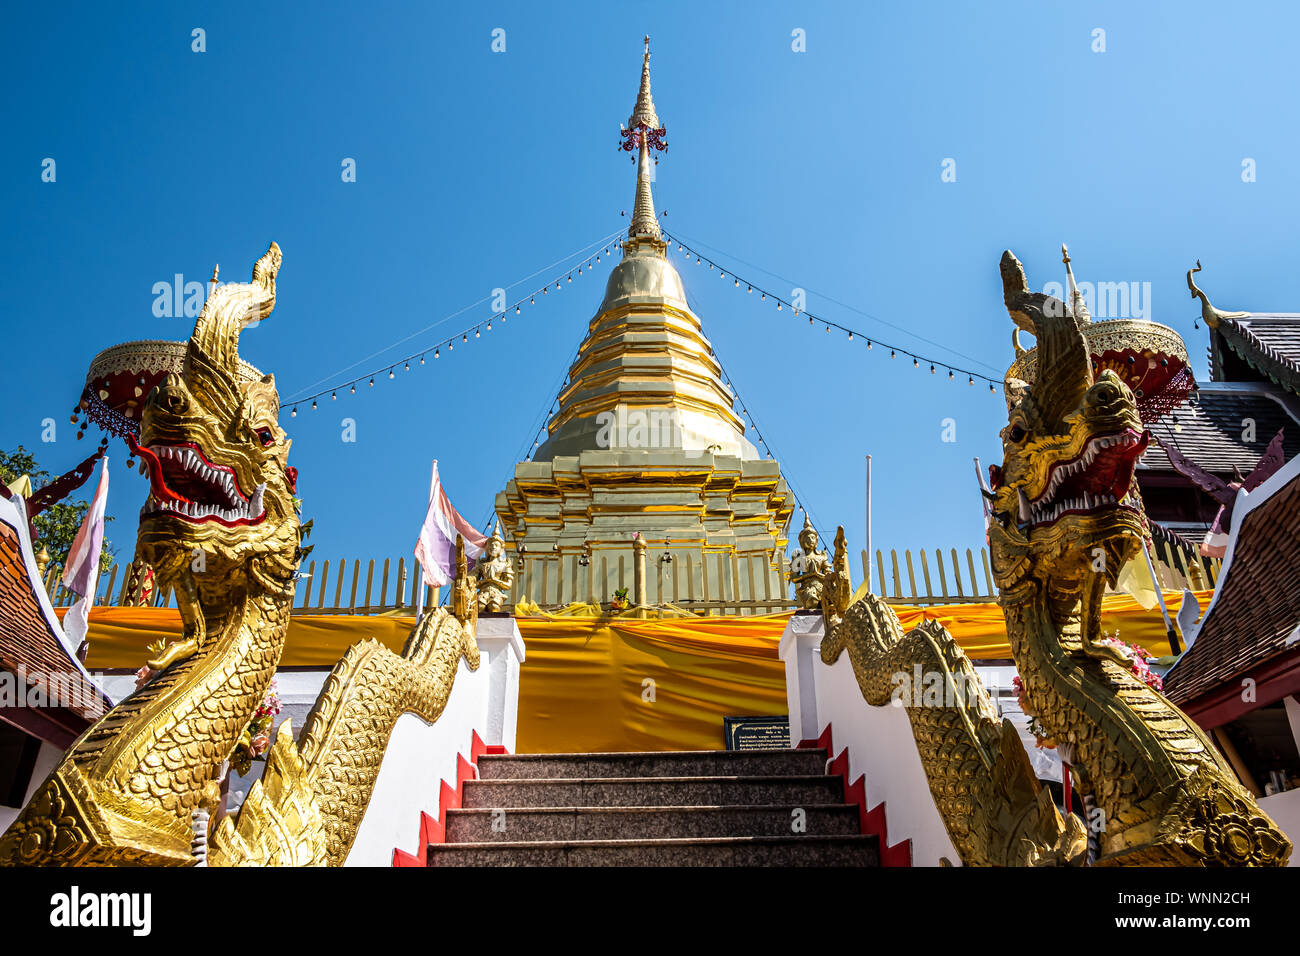 Chiangmai, Thailand - February 24, 2019: View of the golden pagoda at Wat Phra That Doi Kham temple in Chiangmai, Thailand. Stock Photo